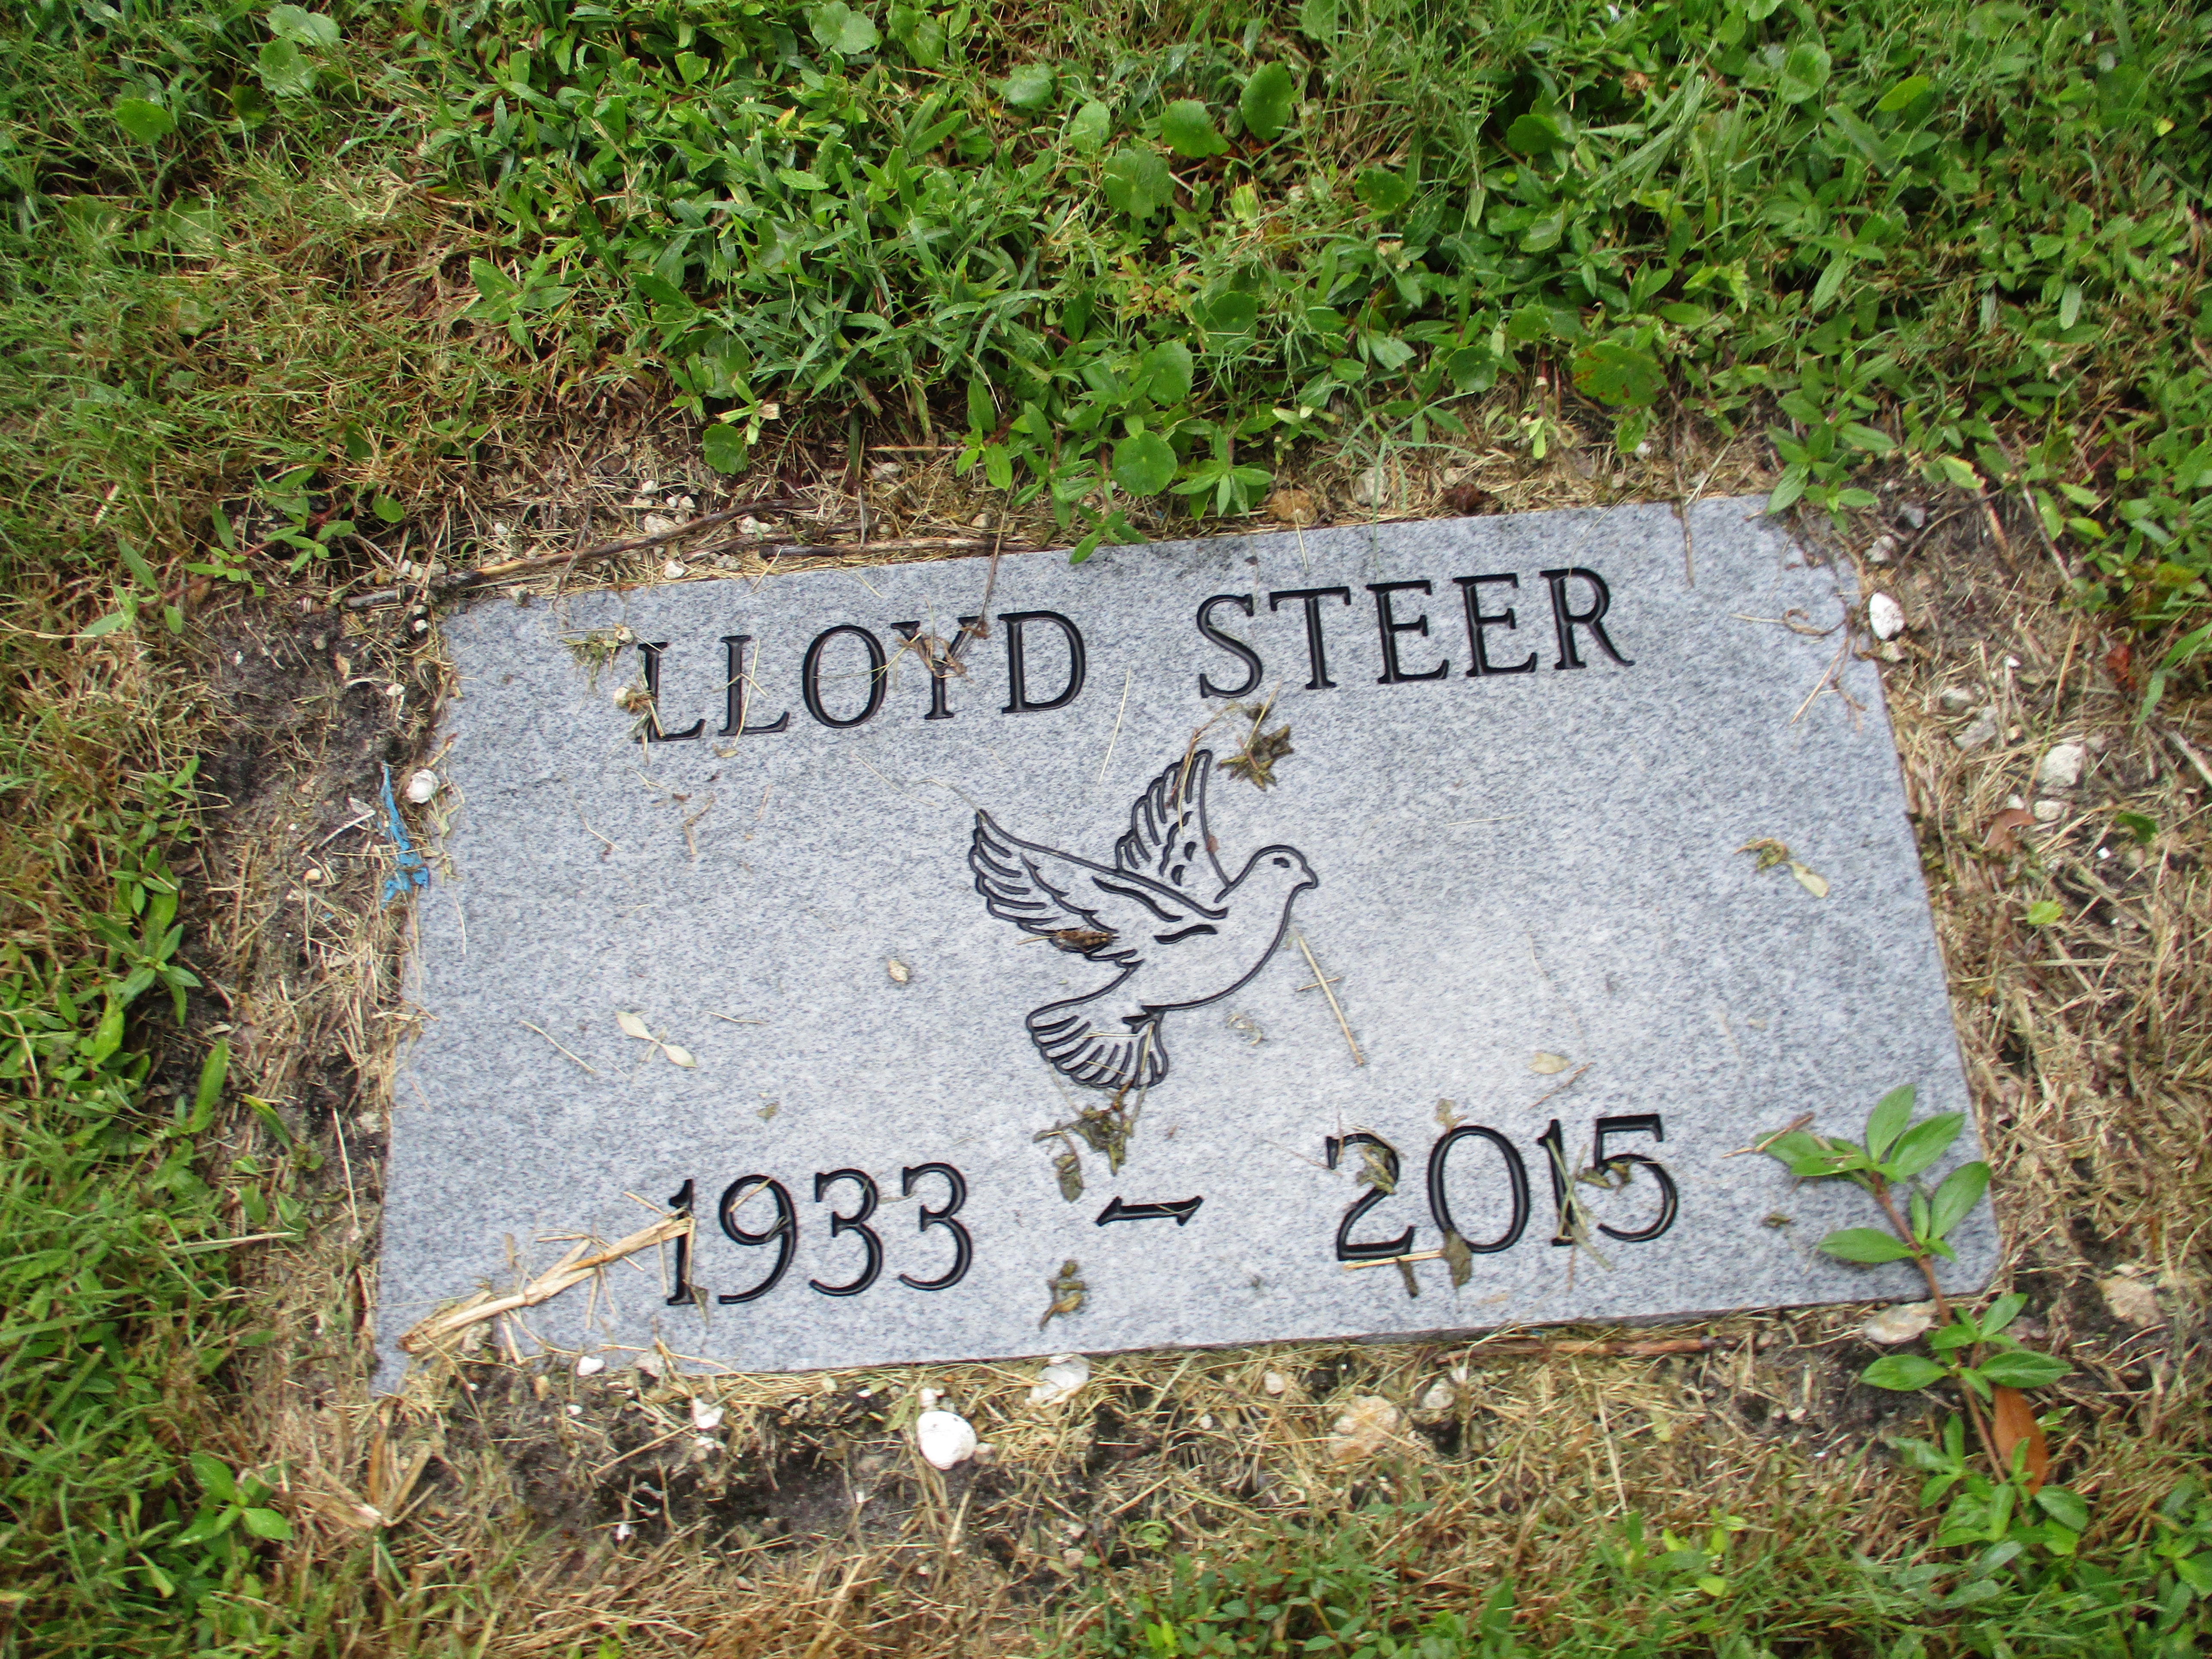 Lloyd Steer